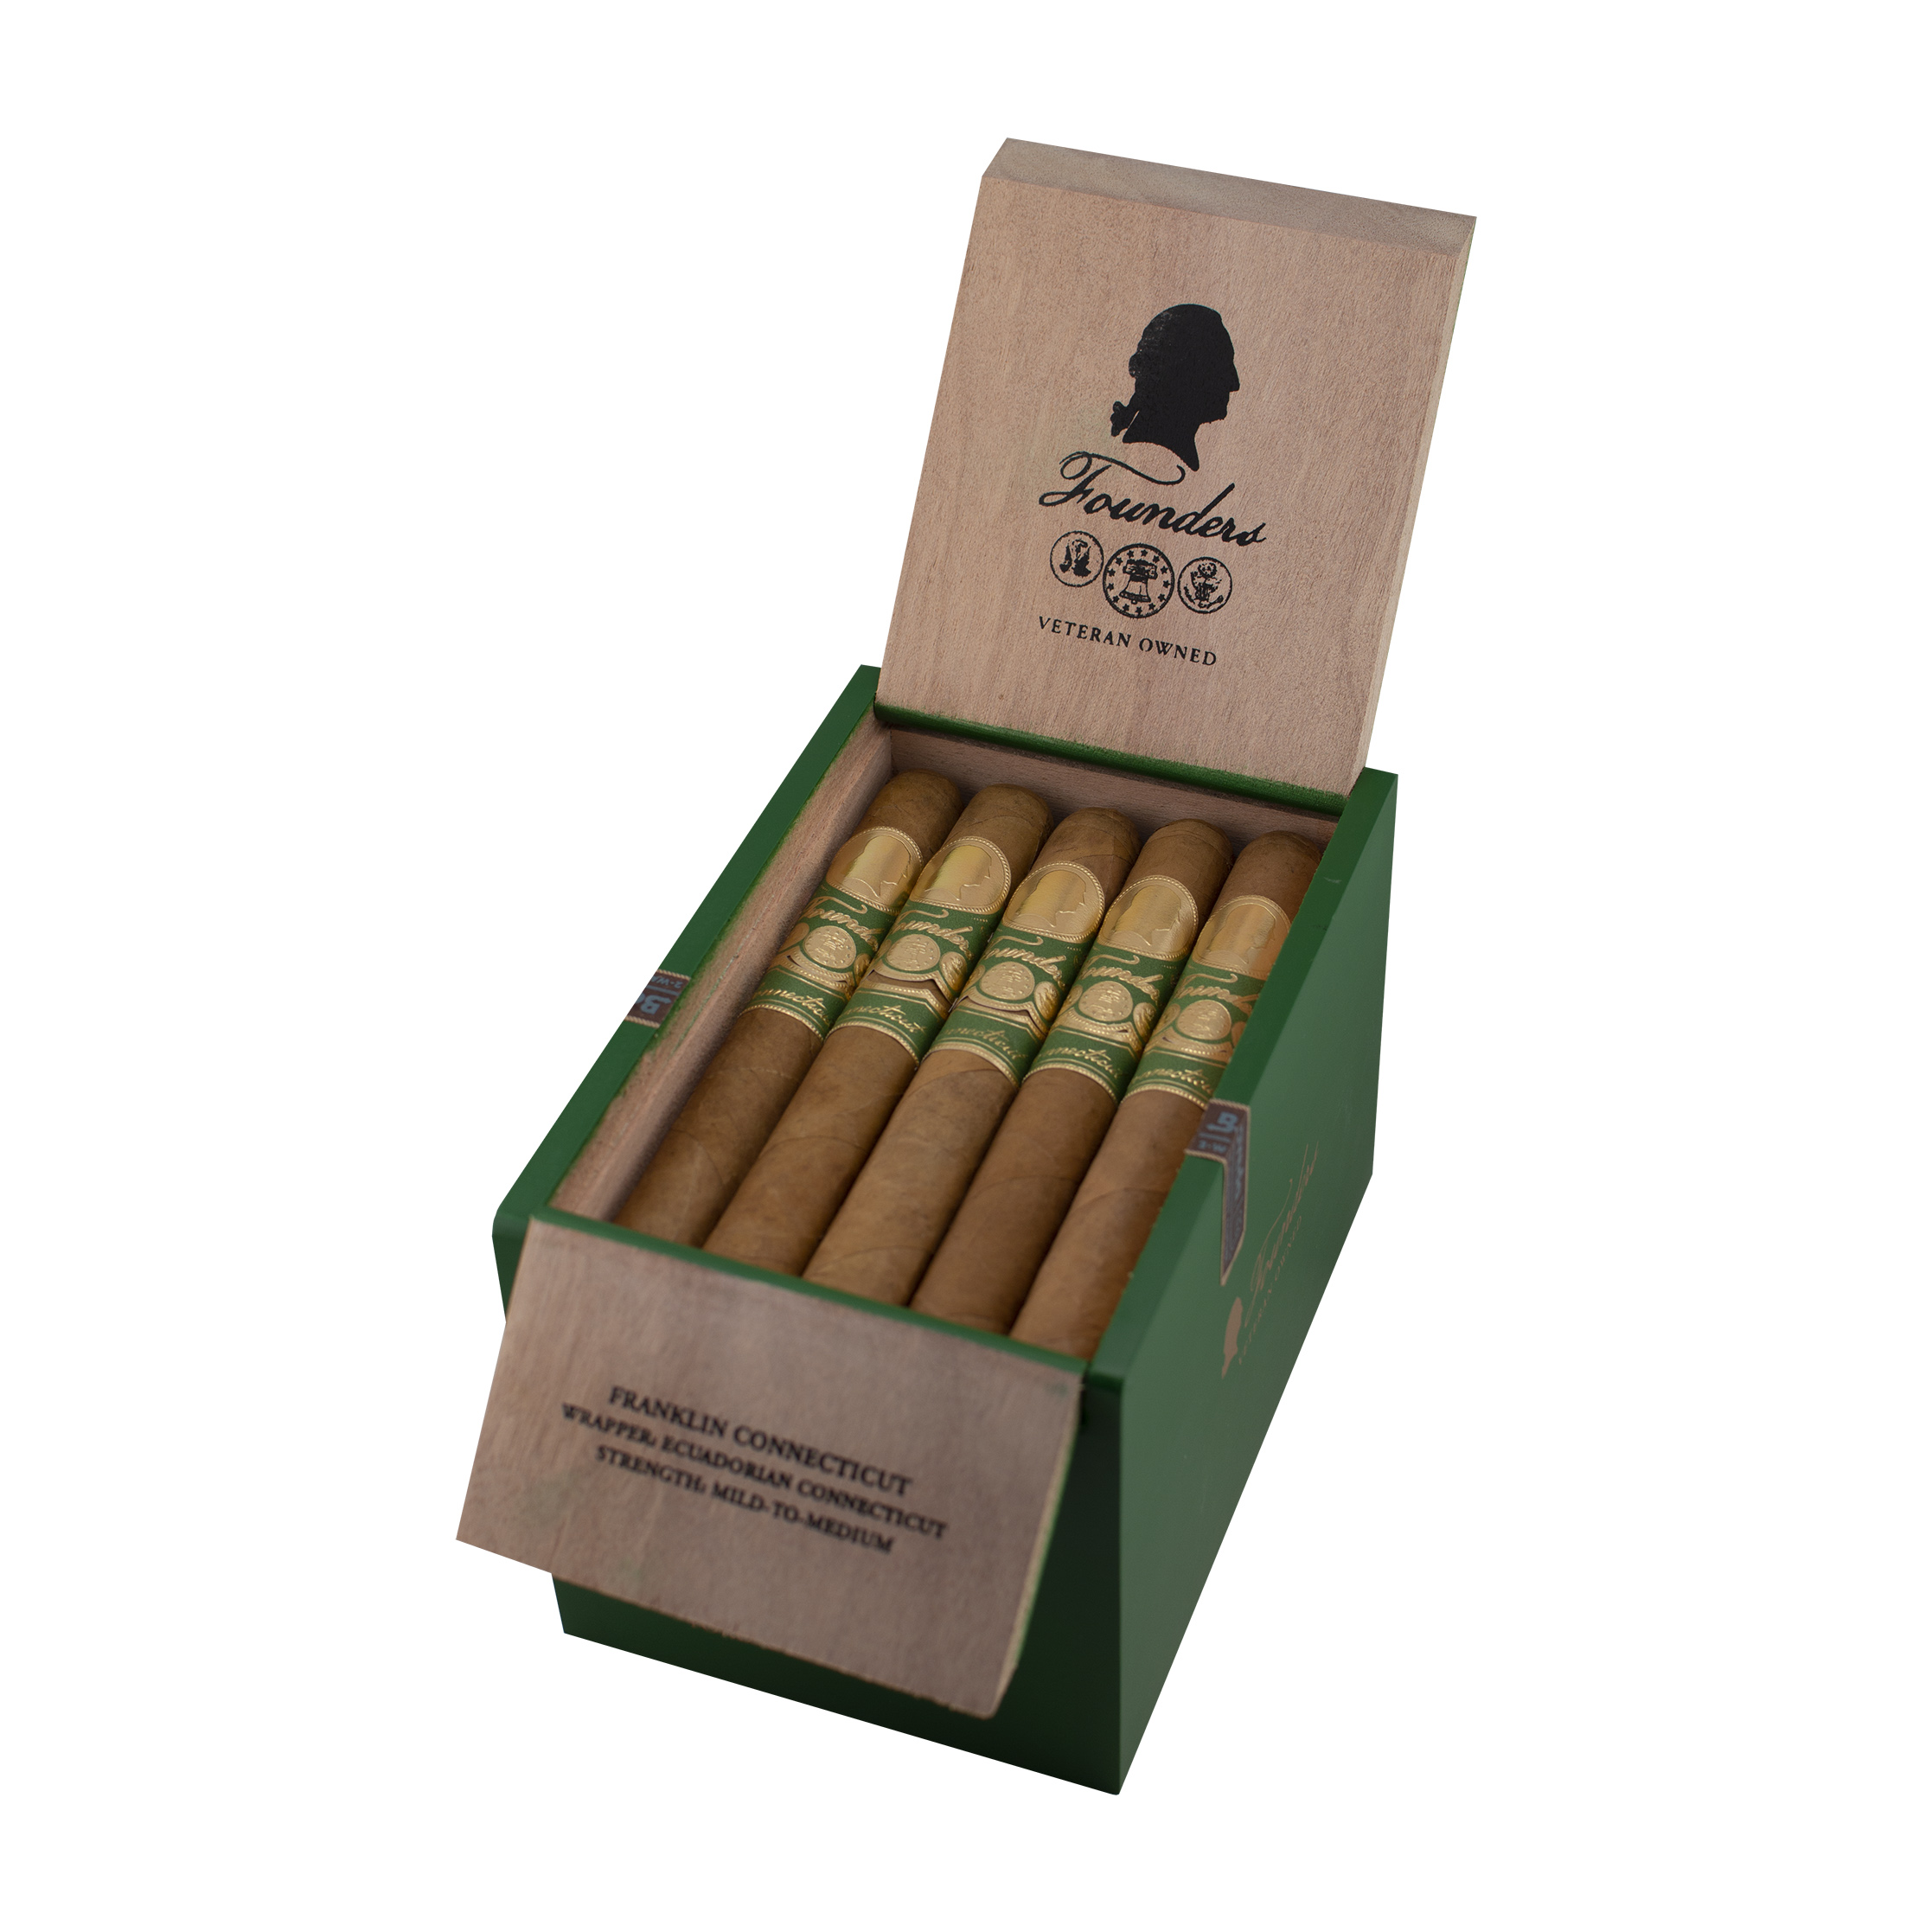 Founders Franklin Connecticut Toro Cigar - Box